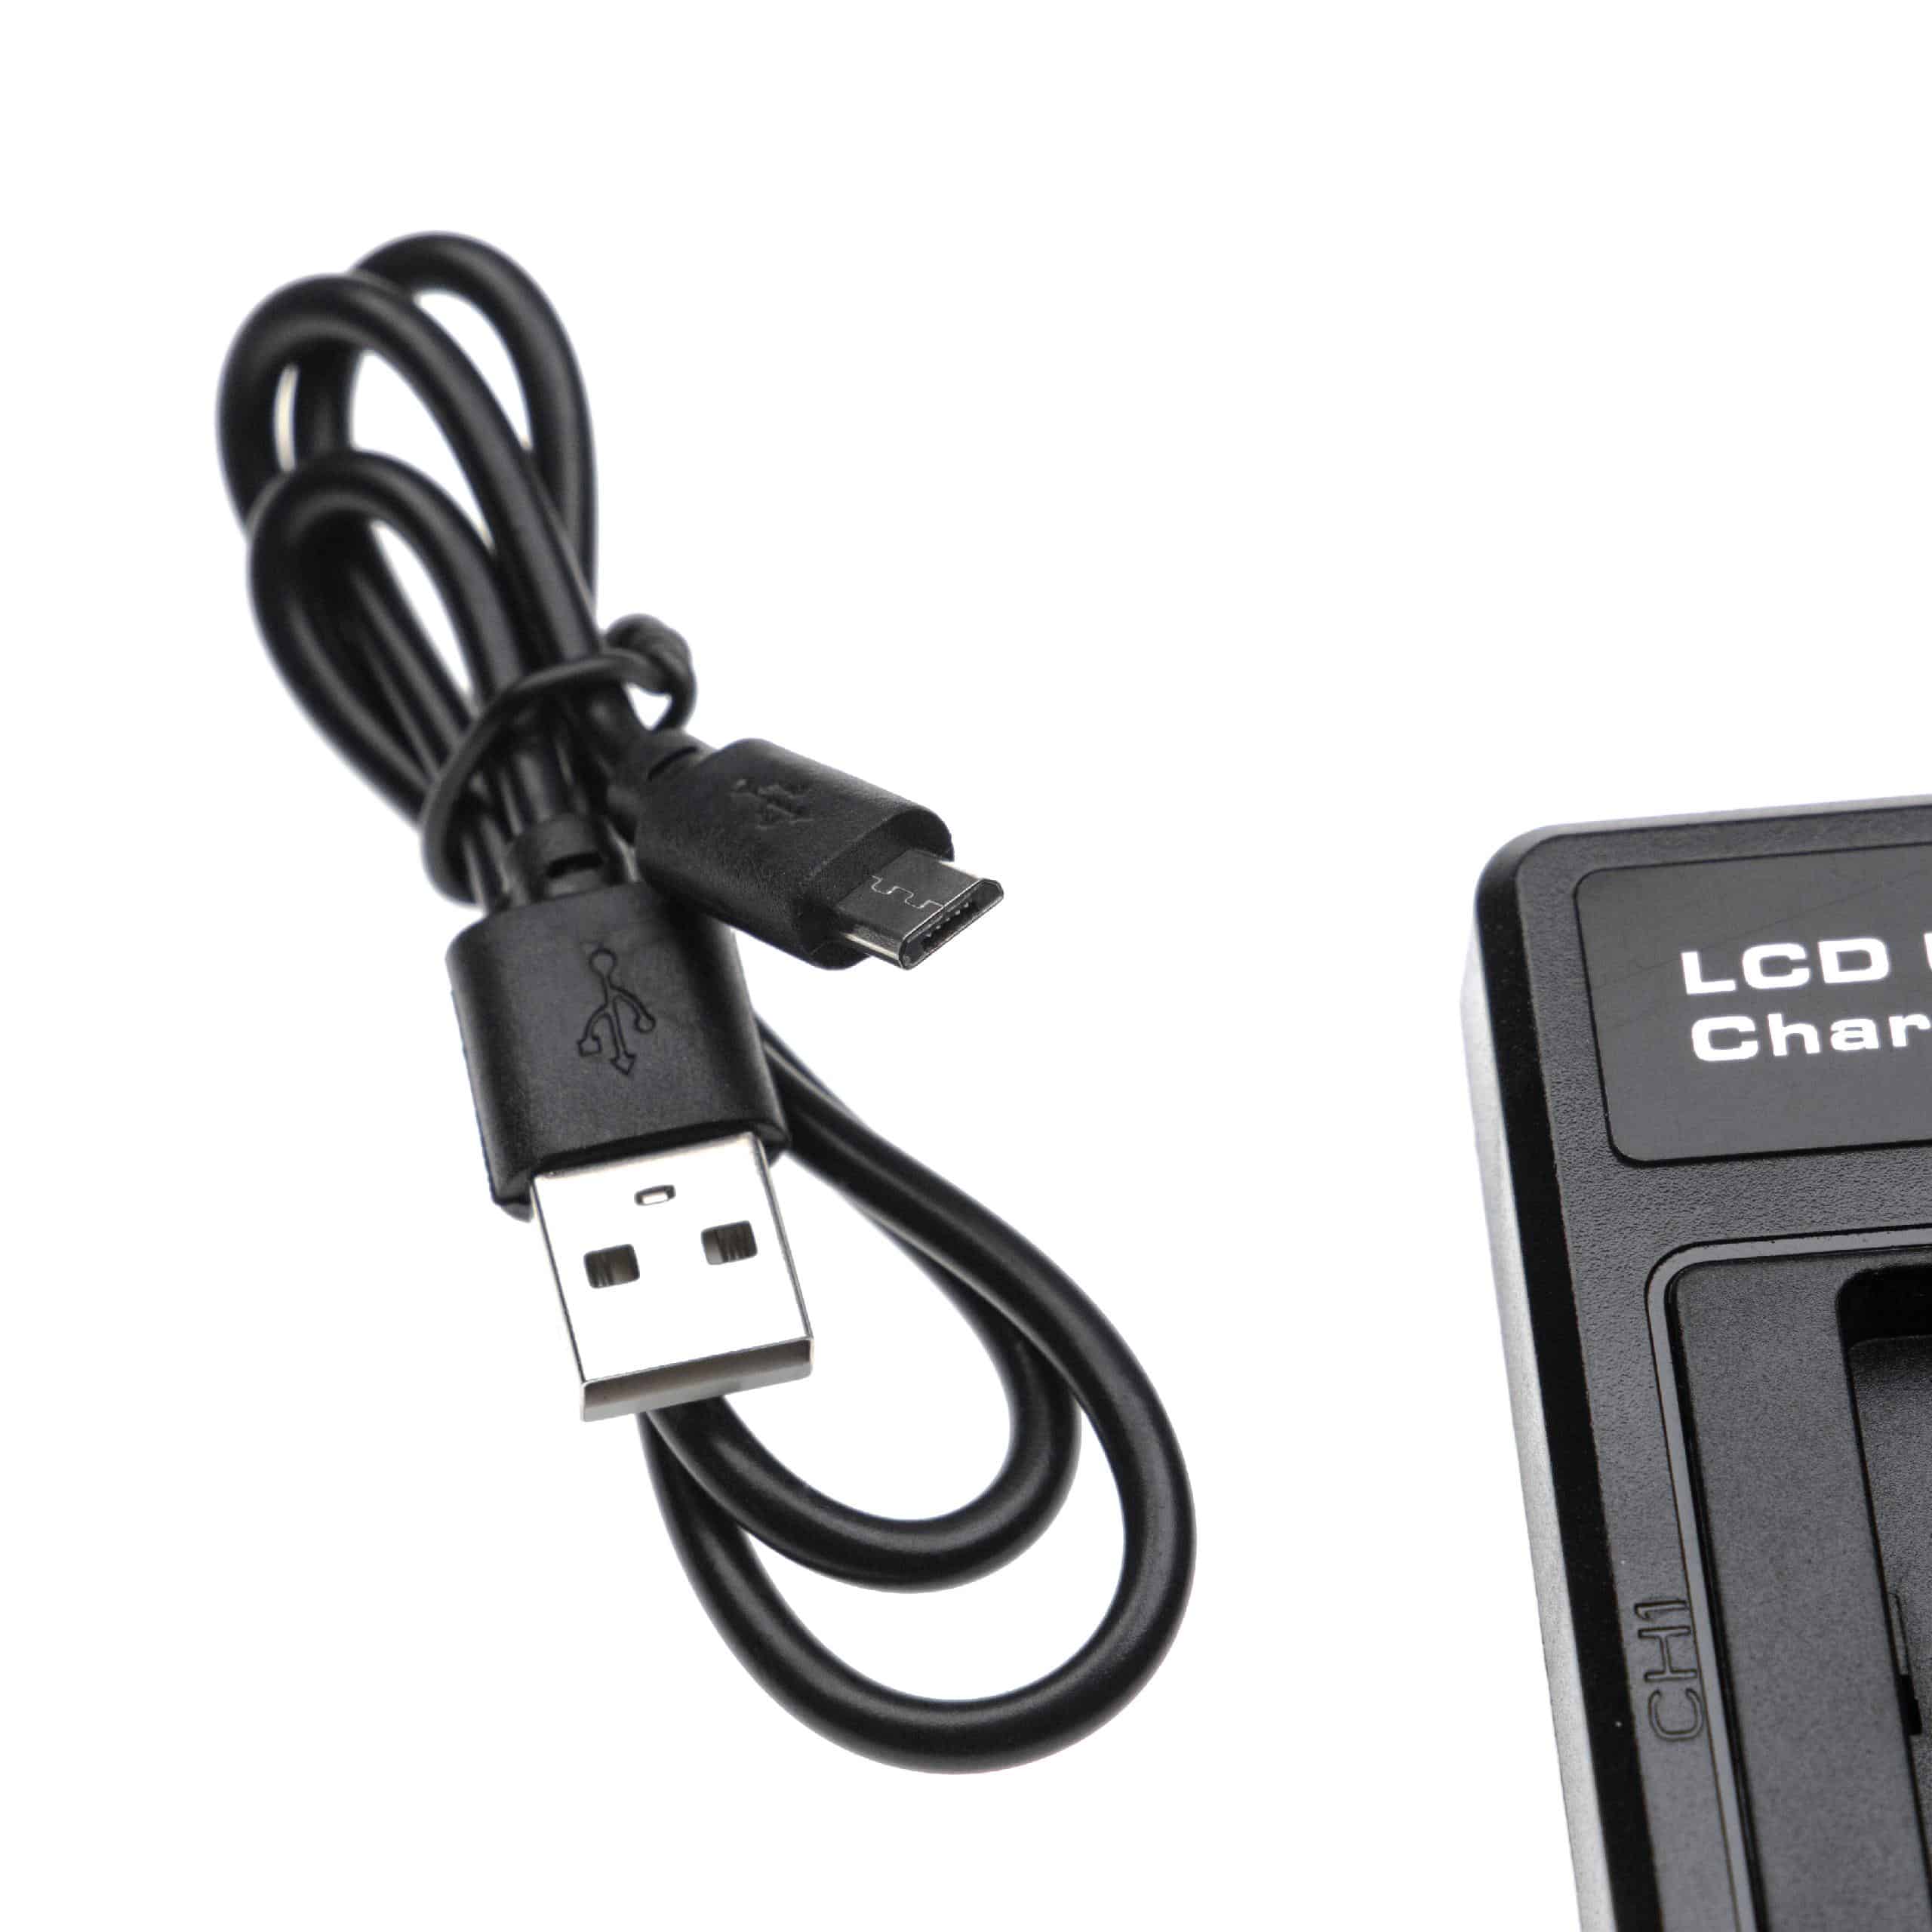 vhbw USB Dual-Ladegerät - Ladeschale mit LC Display